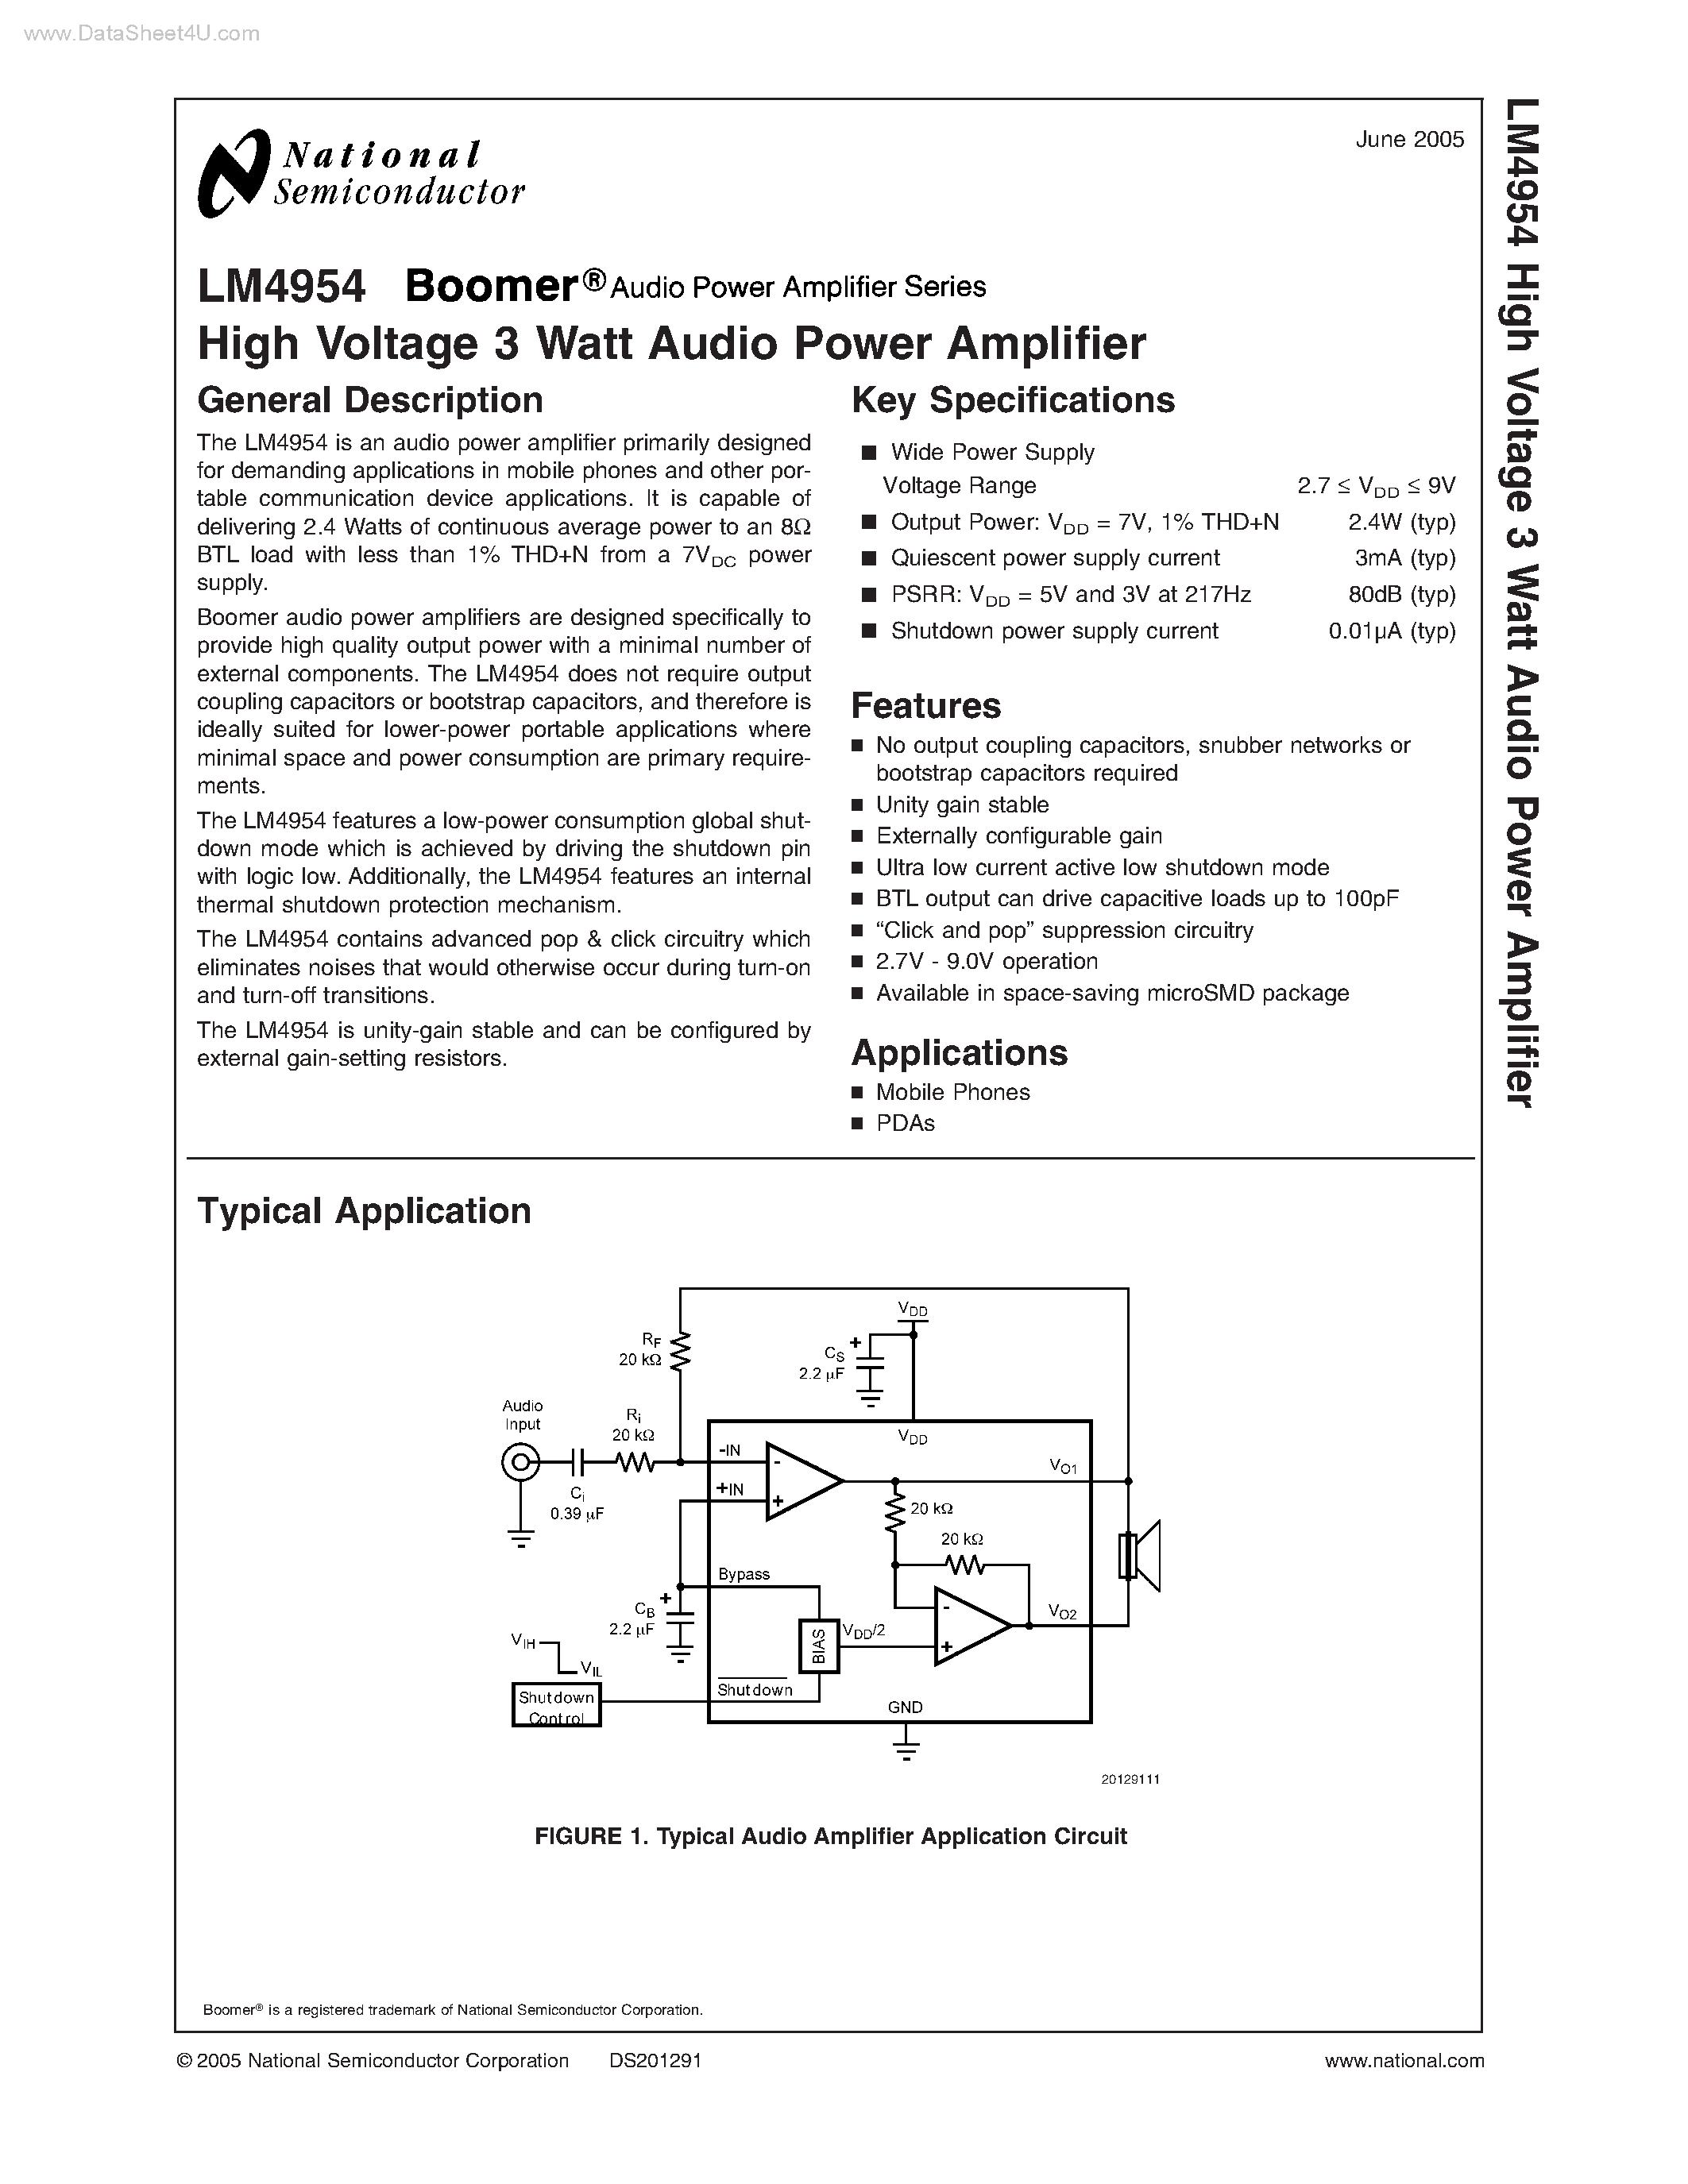 Даташит LM4954 - HIgh Voltage 3 Watt Audio Power Amplifier страница 1